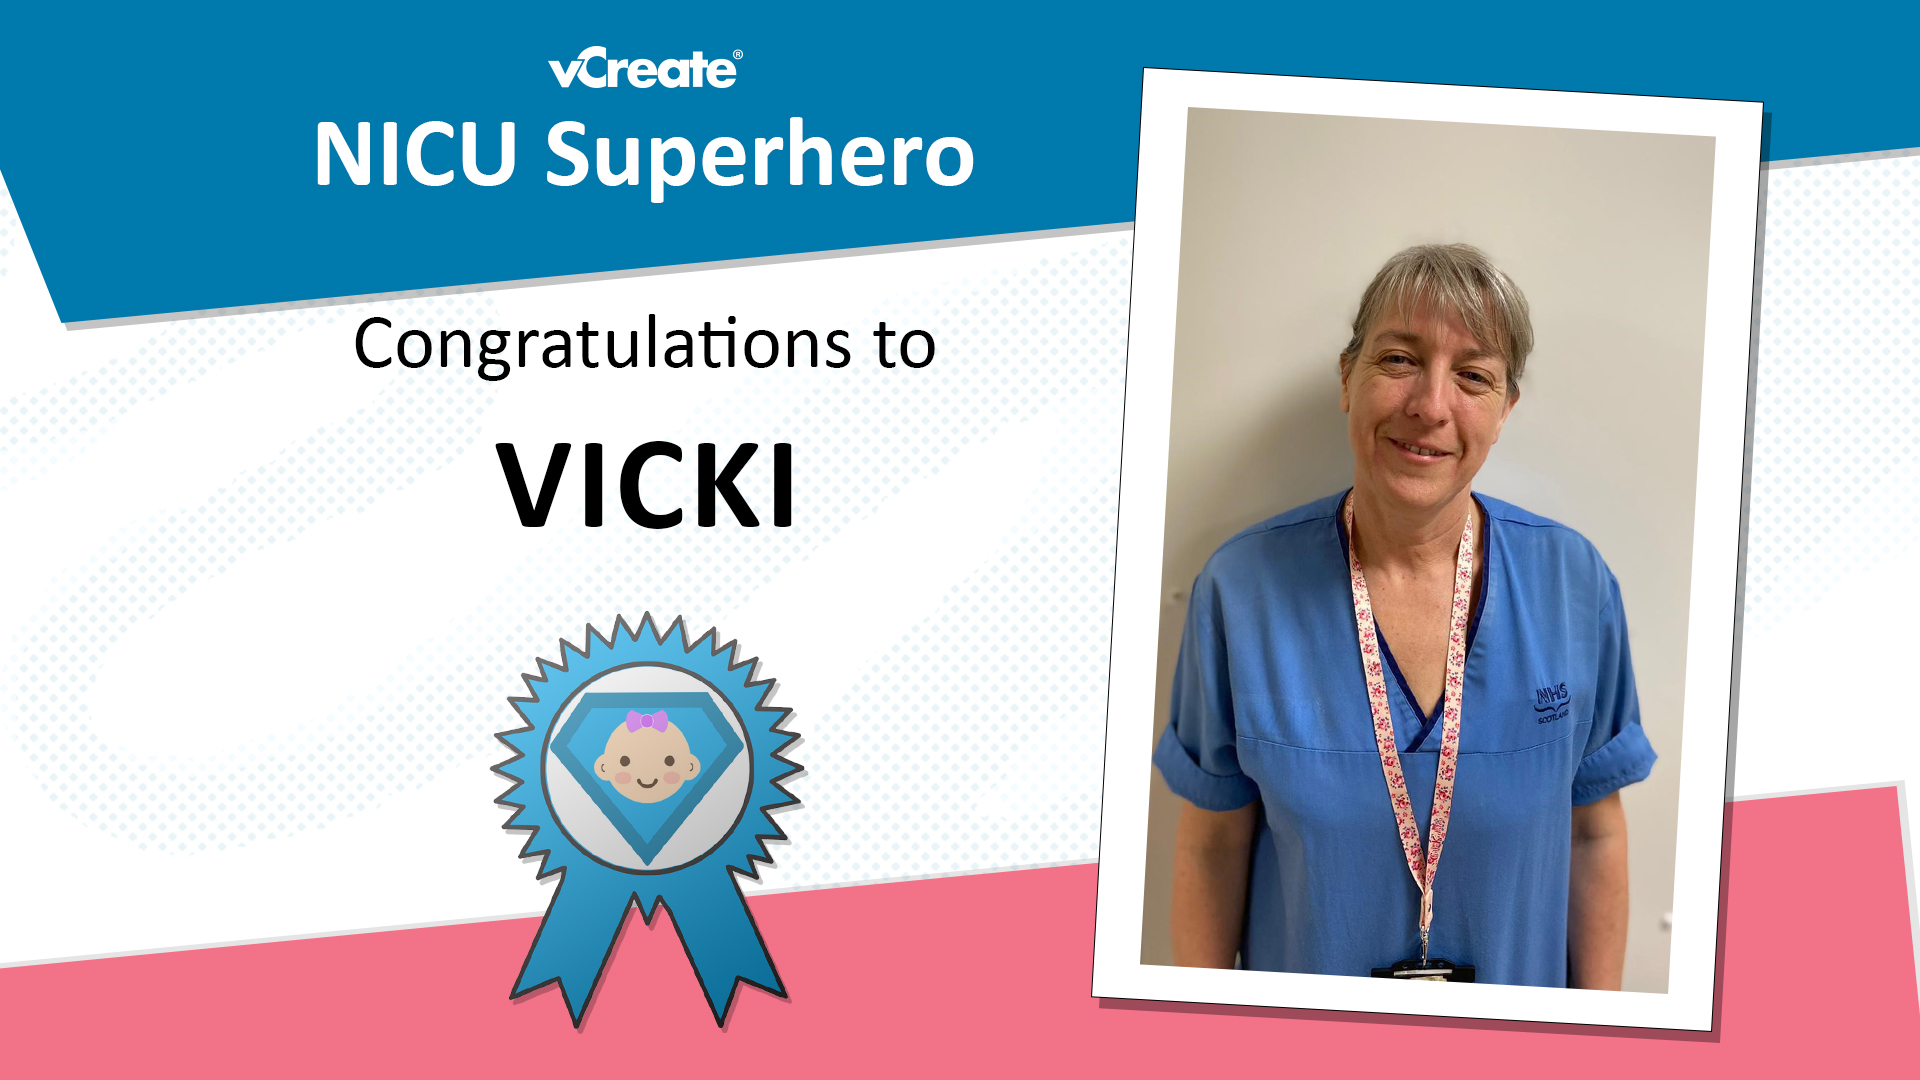 Vicki from Ninewells Hospital is a NICU Superhero!